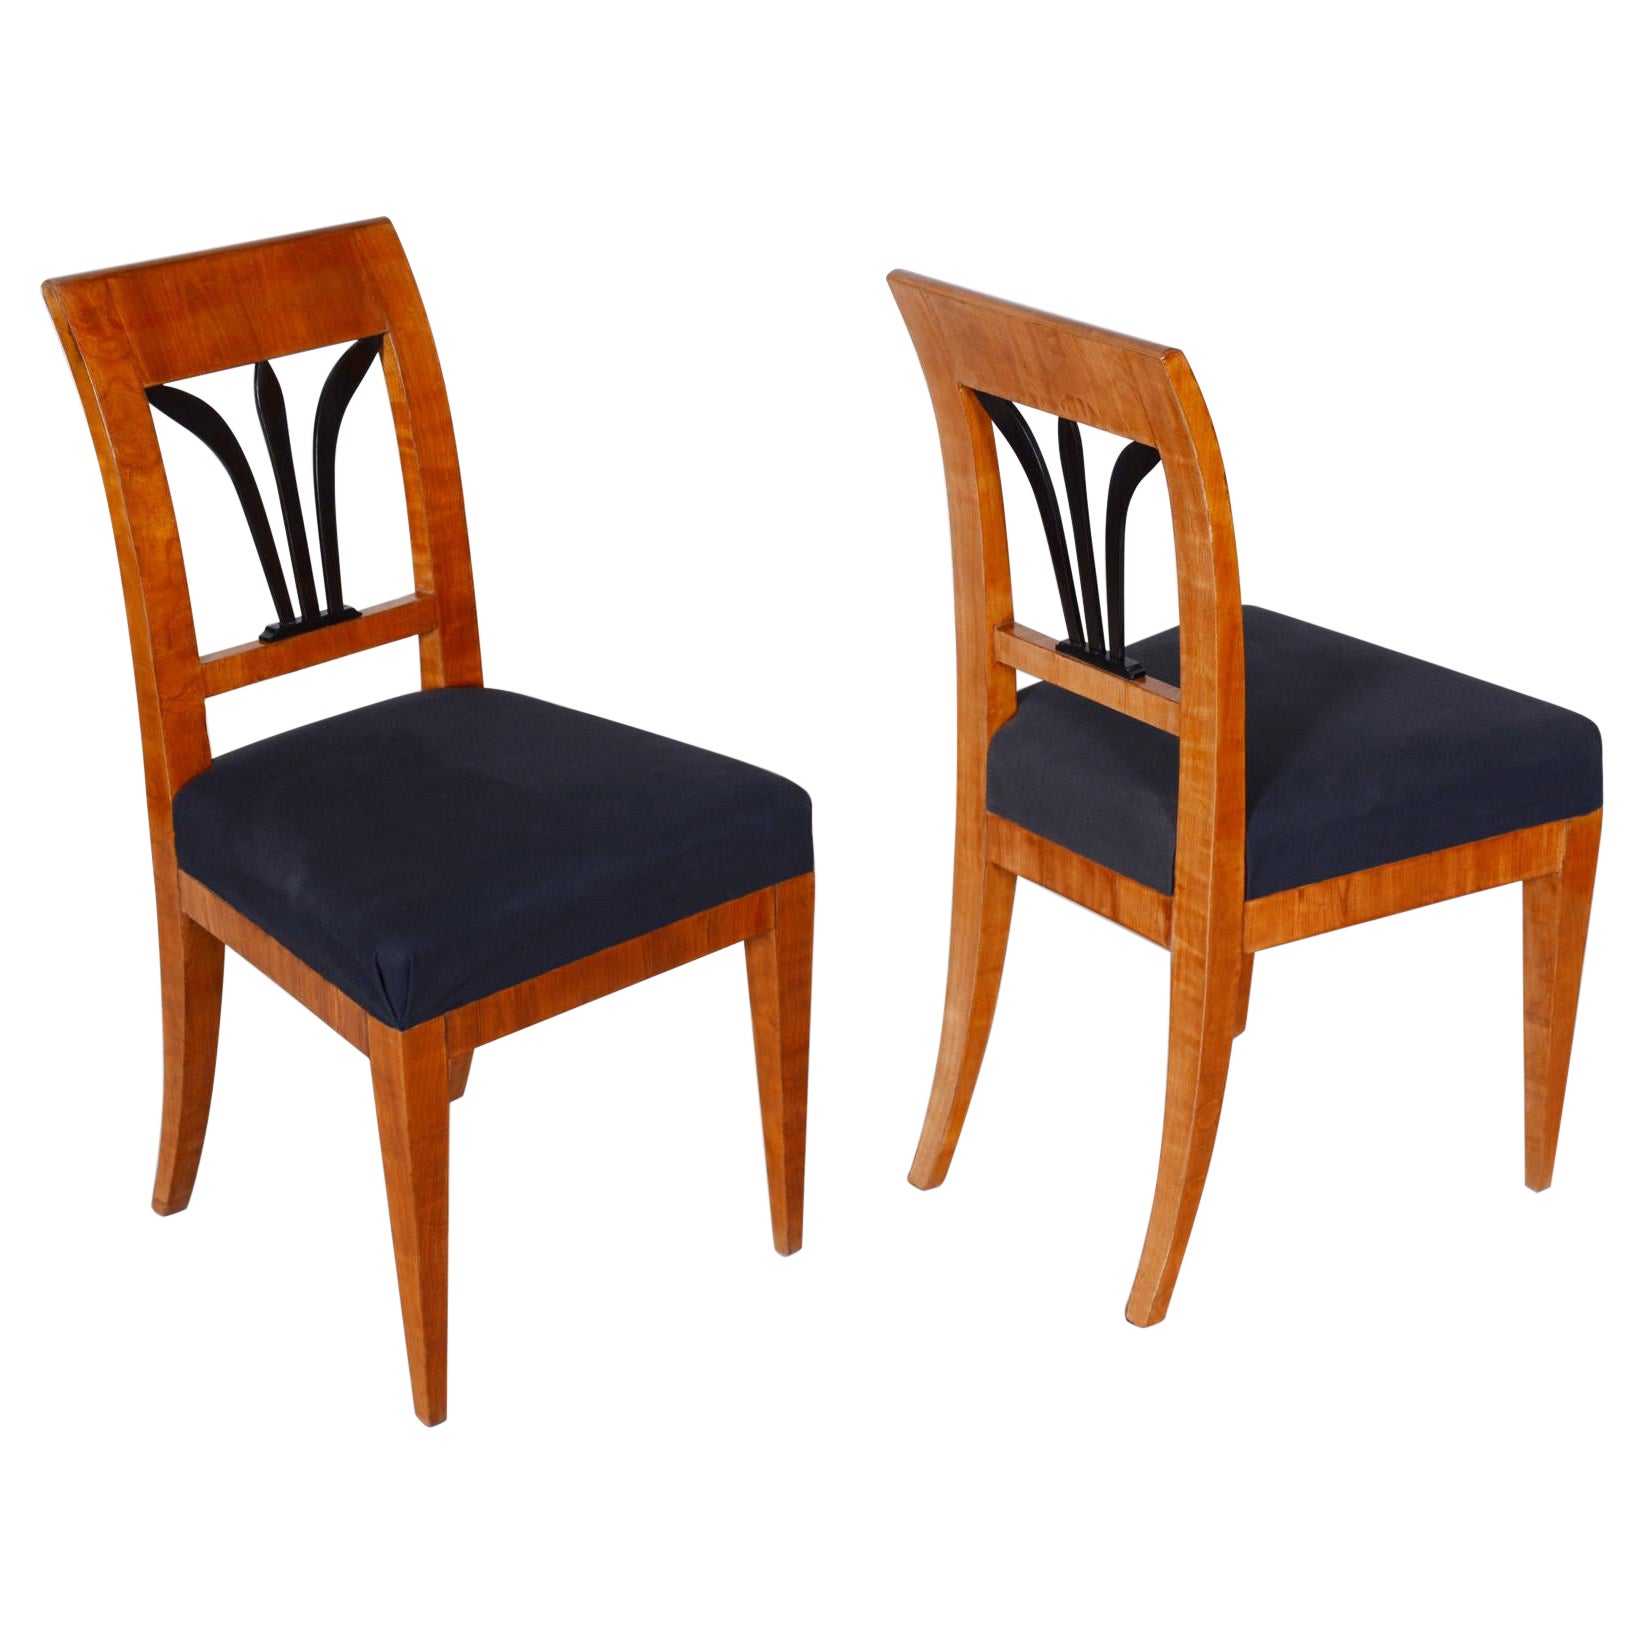 Pair of Biedermeier Dining Chairs Made in Czechia circa 1830s, Restored Cherry